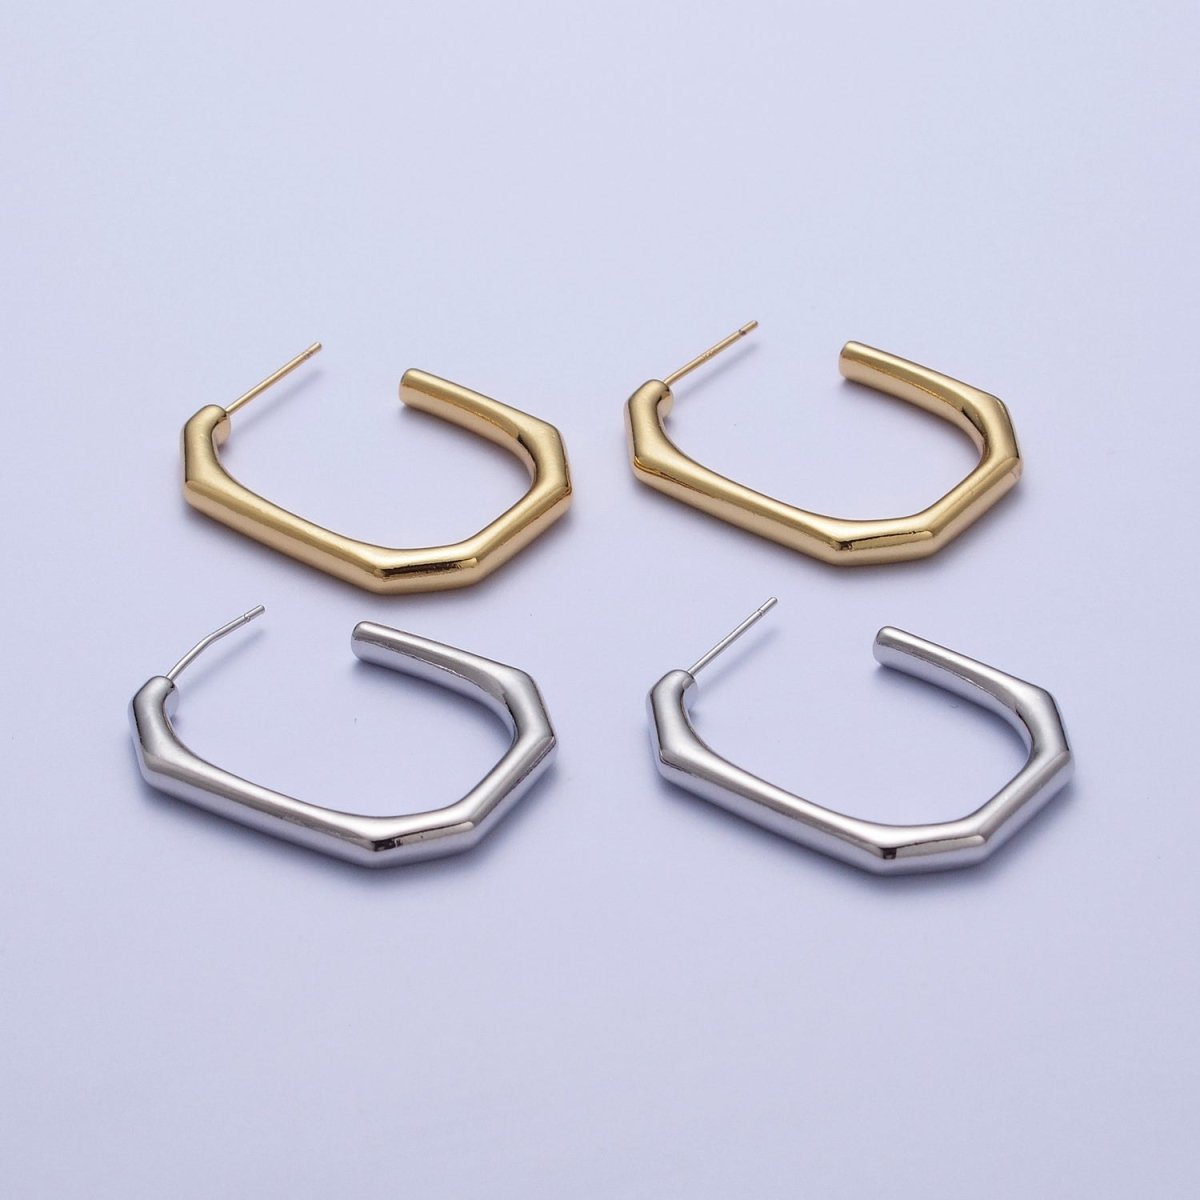 Modern Minimalist Geometric Hexagonal Post Studs J Shaped Hoops Earrings in Gold & Silver | AE1097 AE1098 - DLUXCA